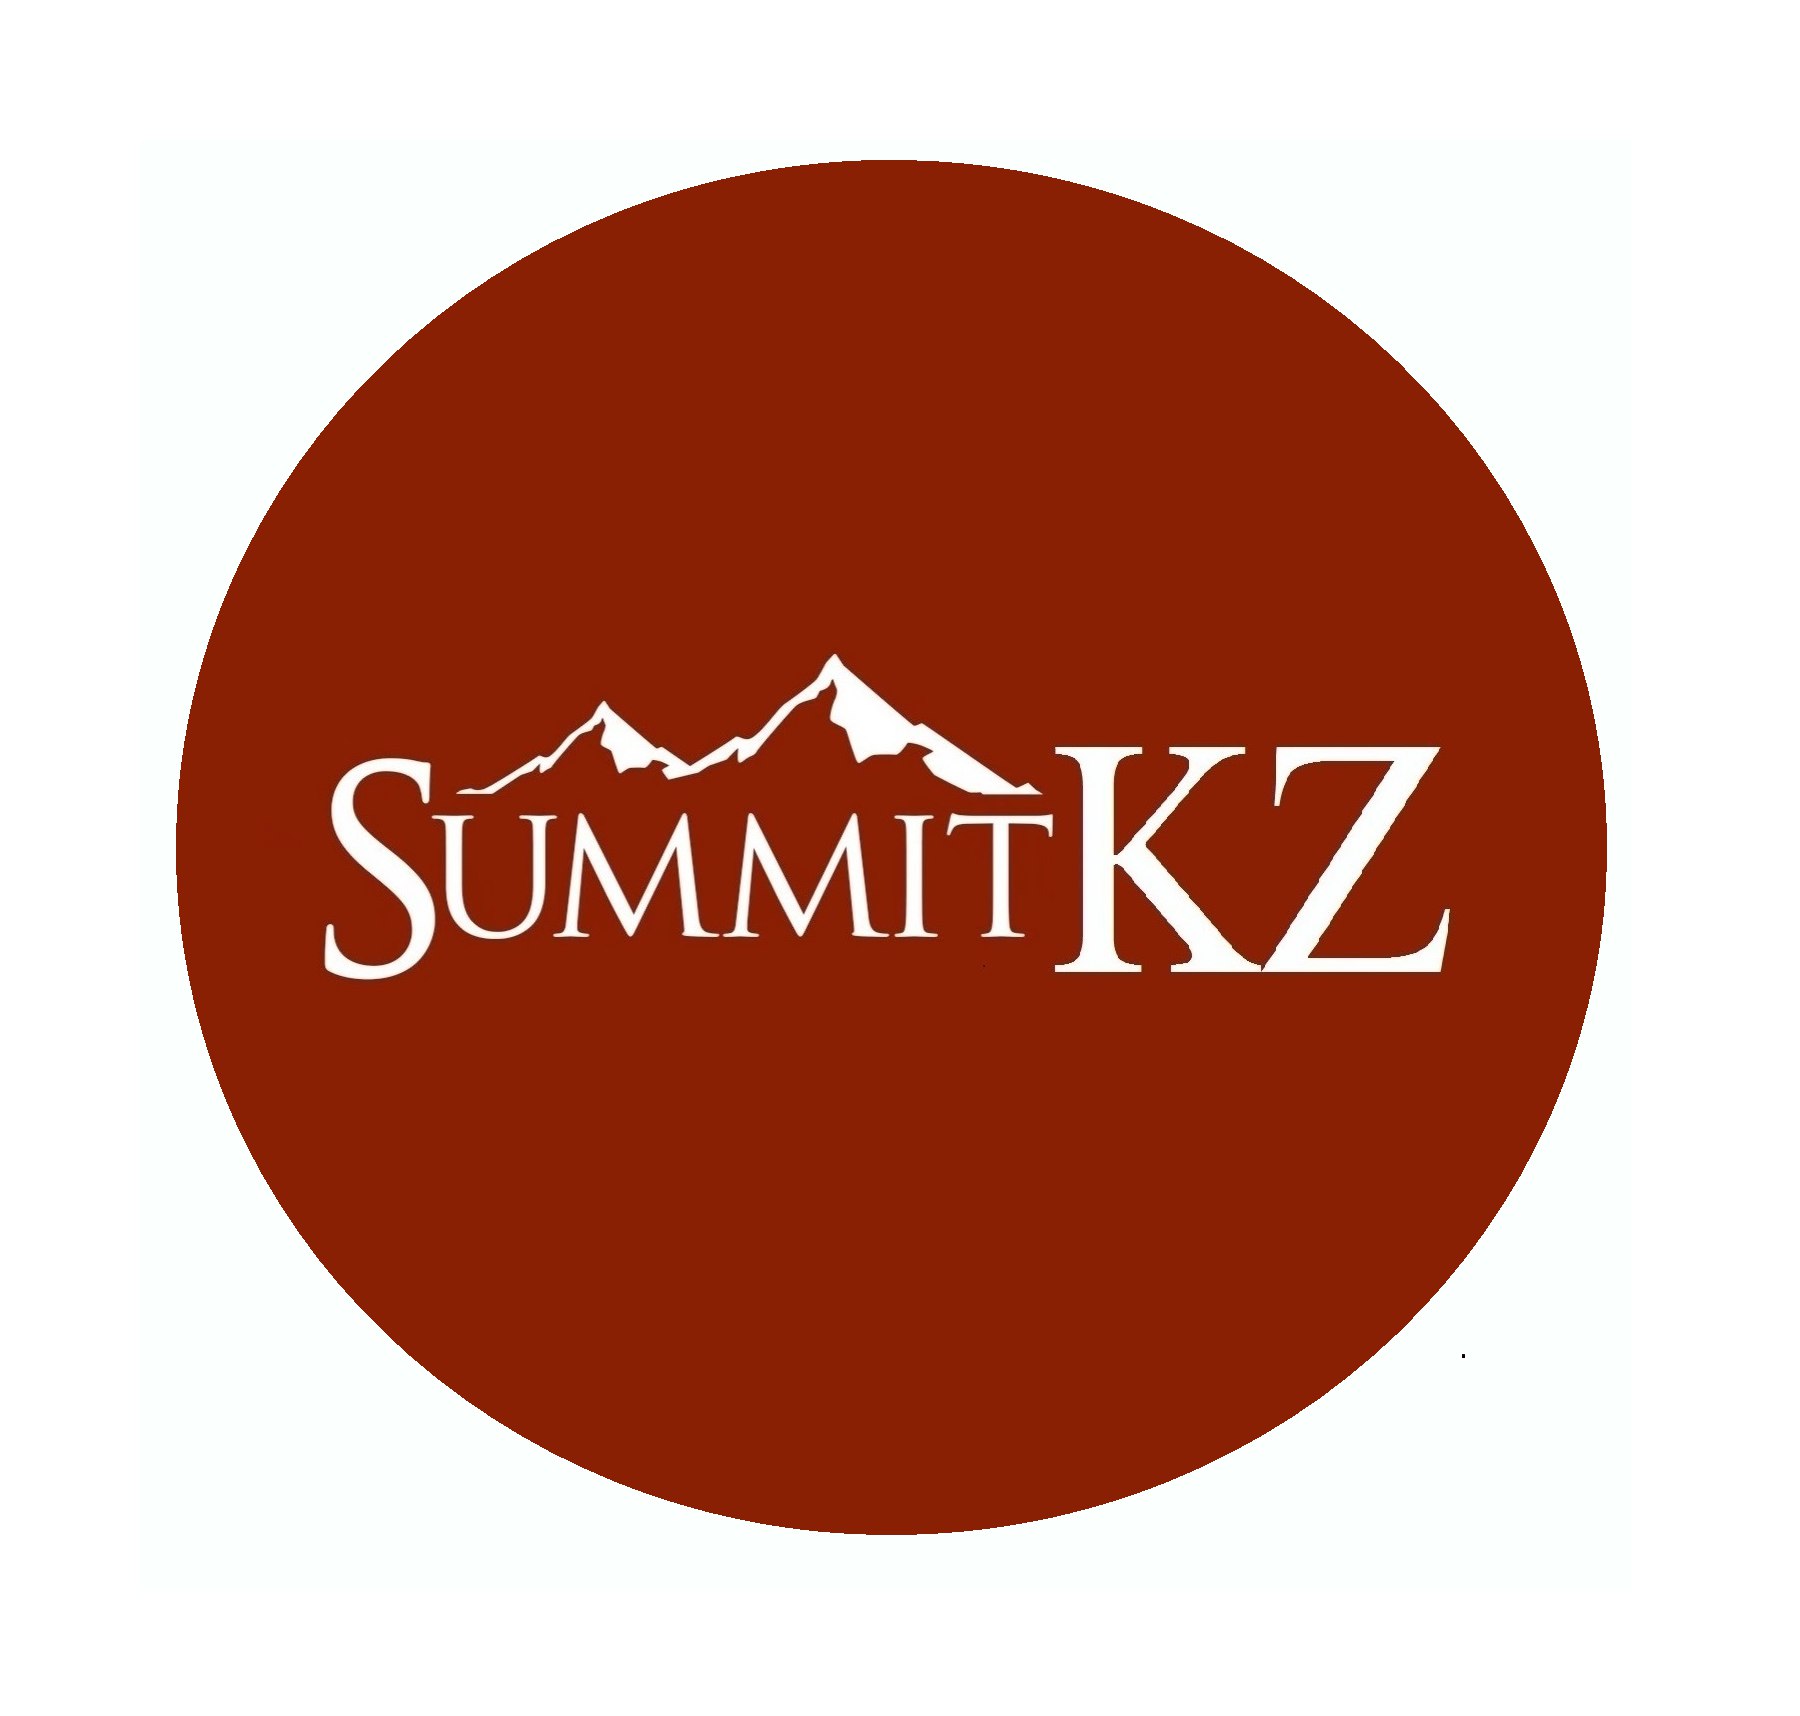 Summit KZ